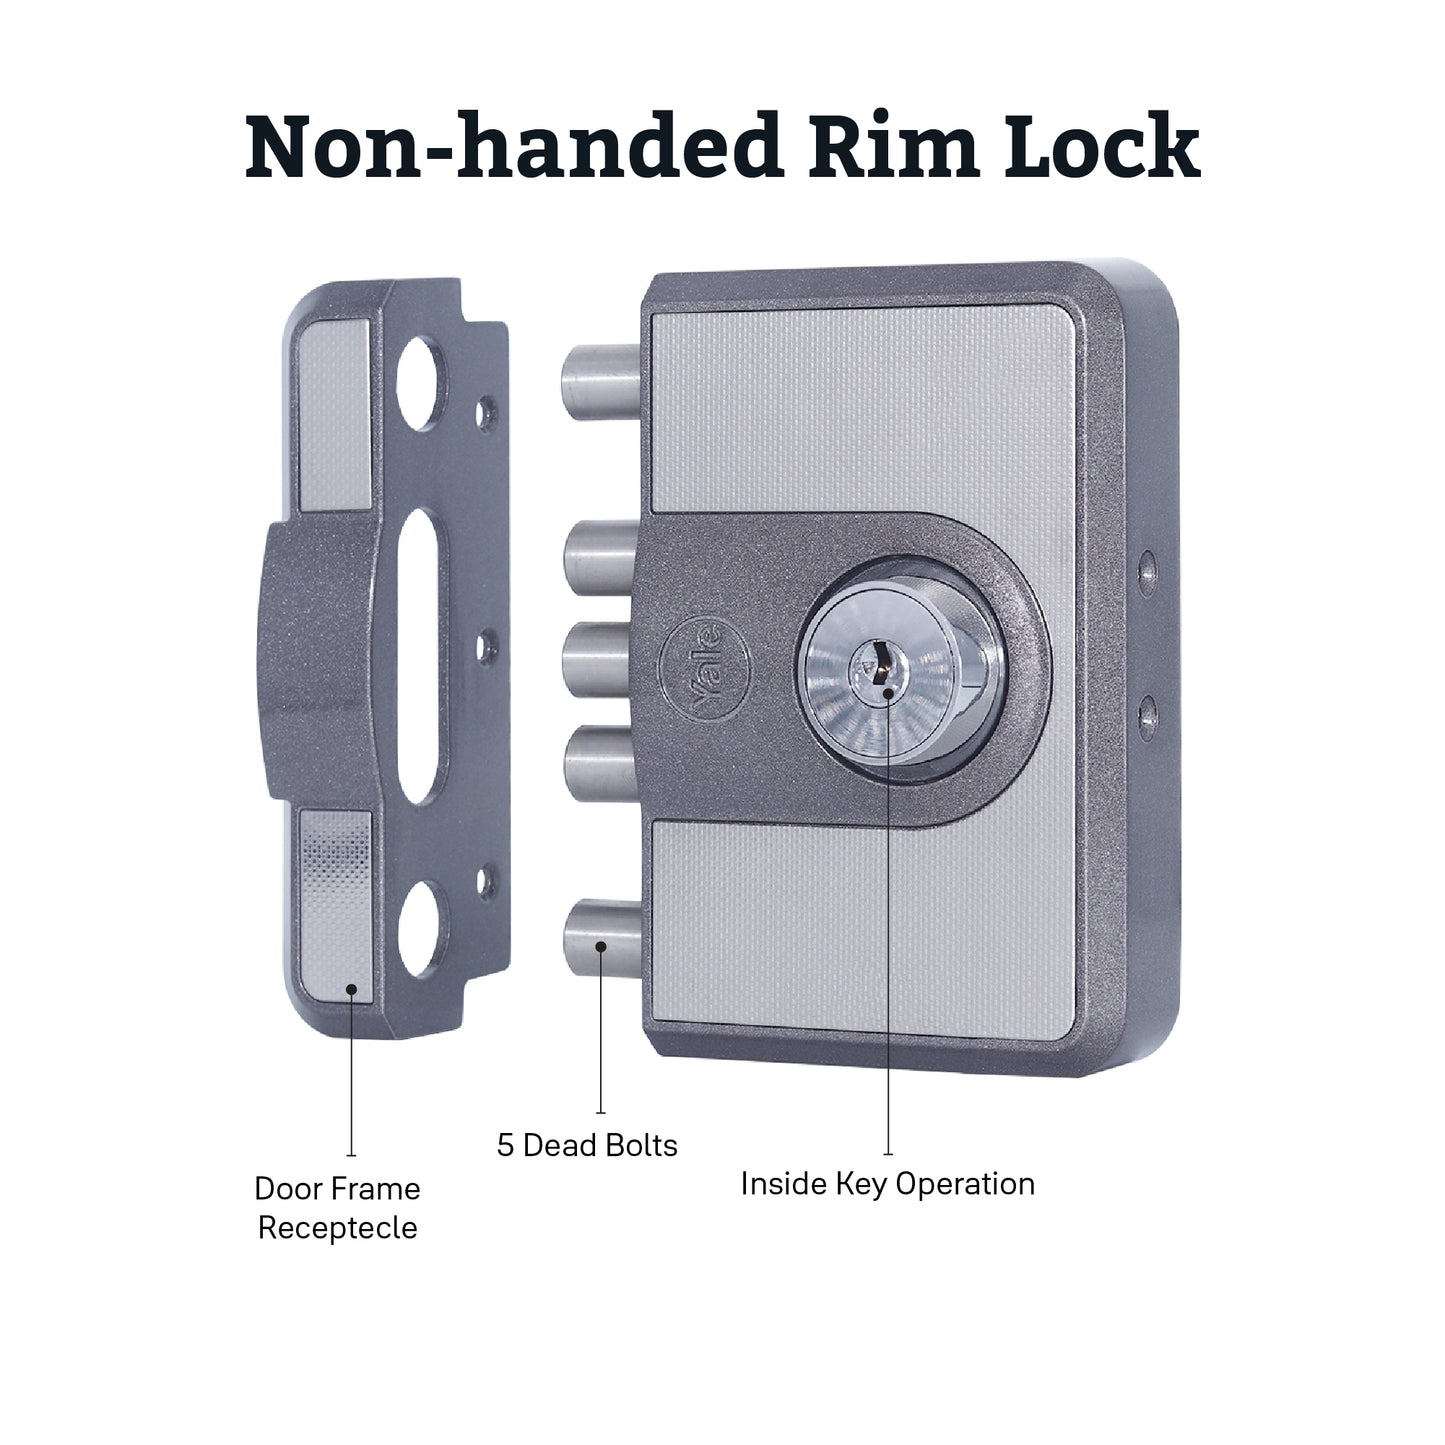 CBD-Cinco 500 Series 5 Dead Bolt Main Door RIM Lock, Both Side Keys, Grey, With Dimple Keys